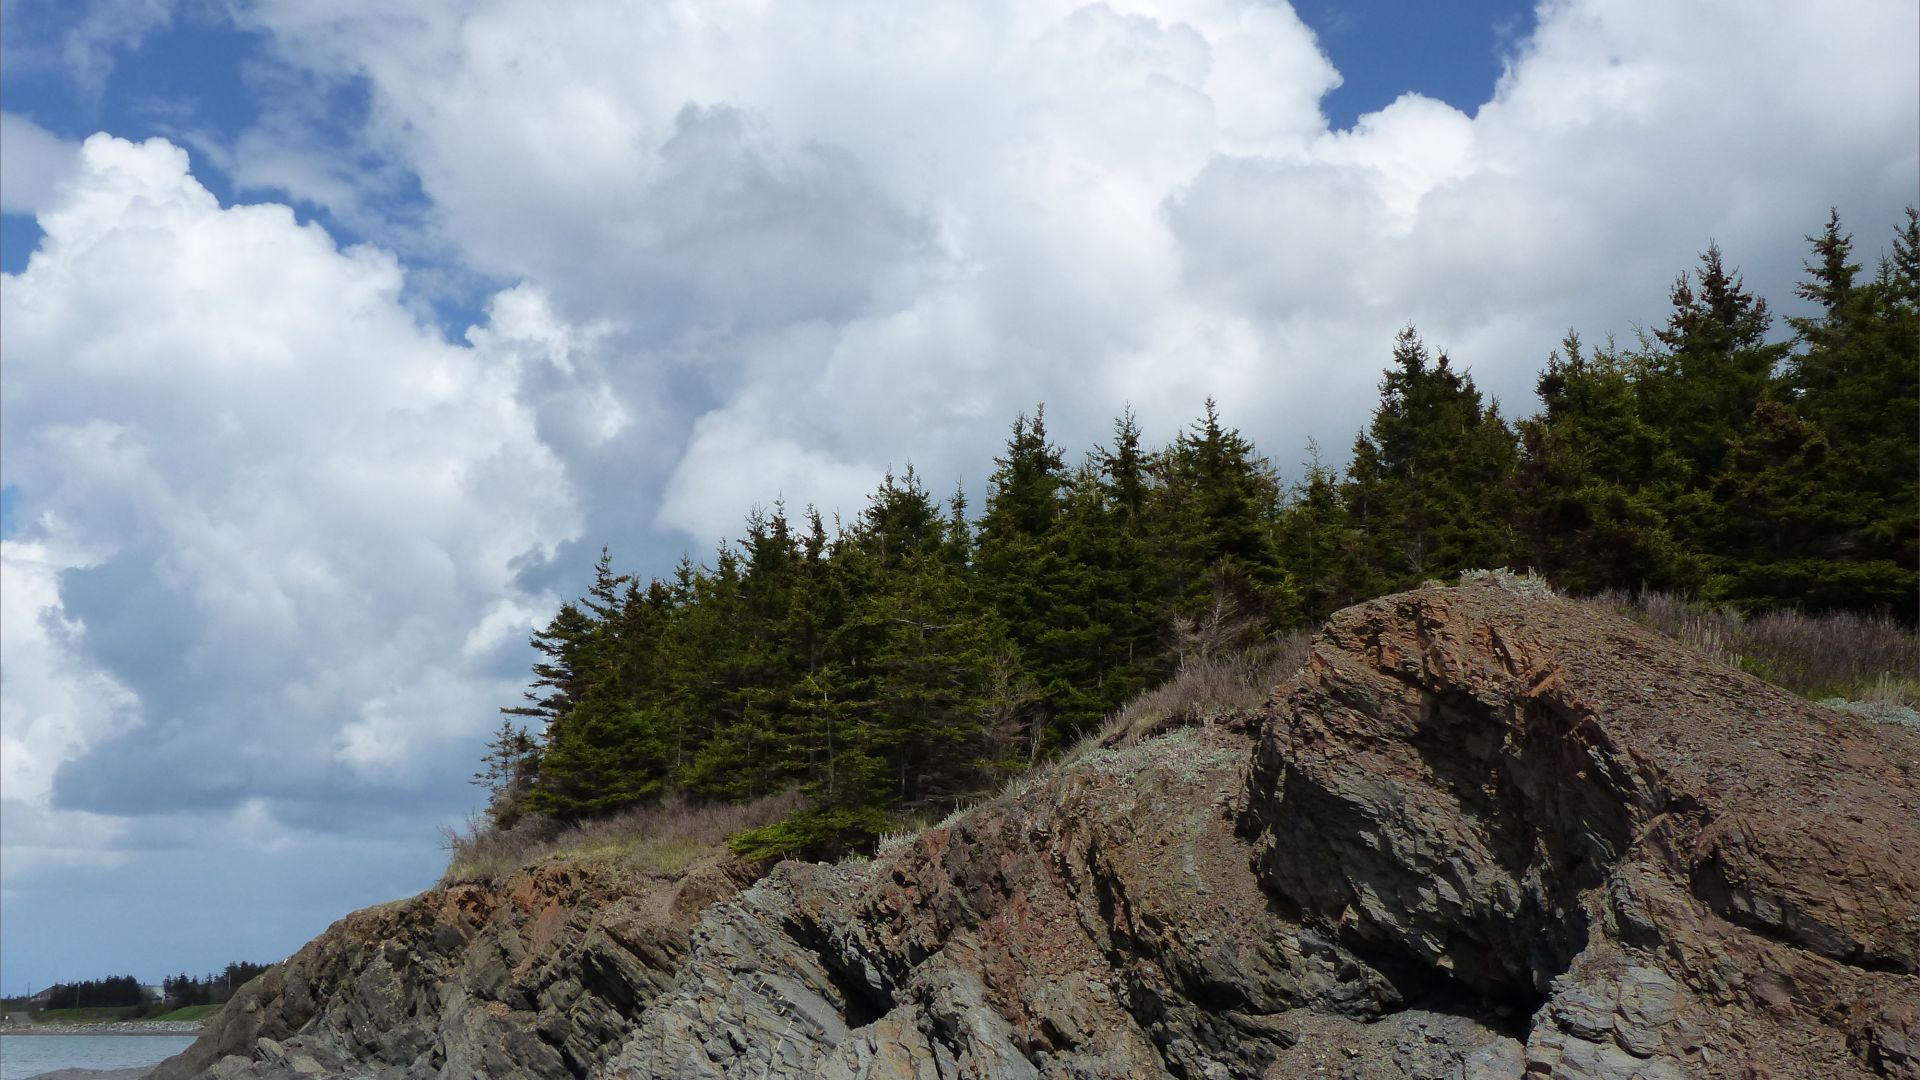 Weathering mudstone rock strata and pine trees on the coast in Nova Scotia